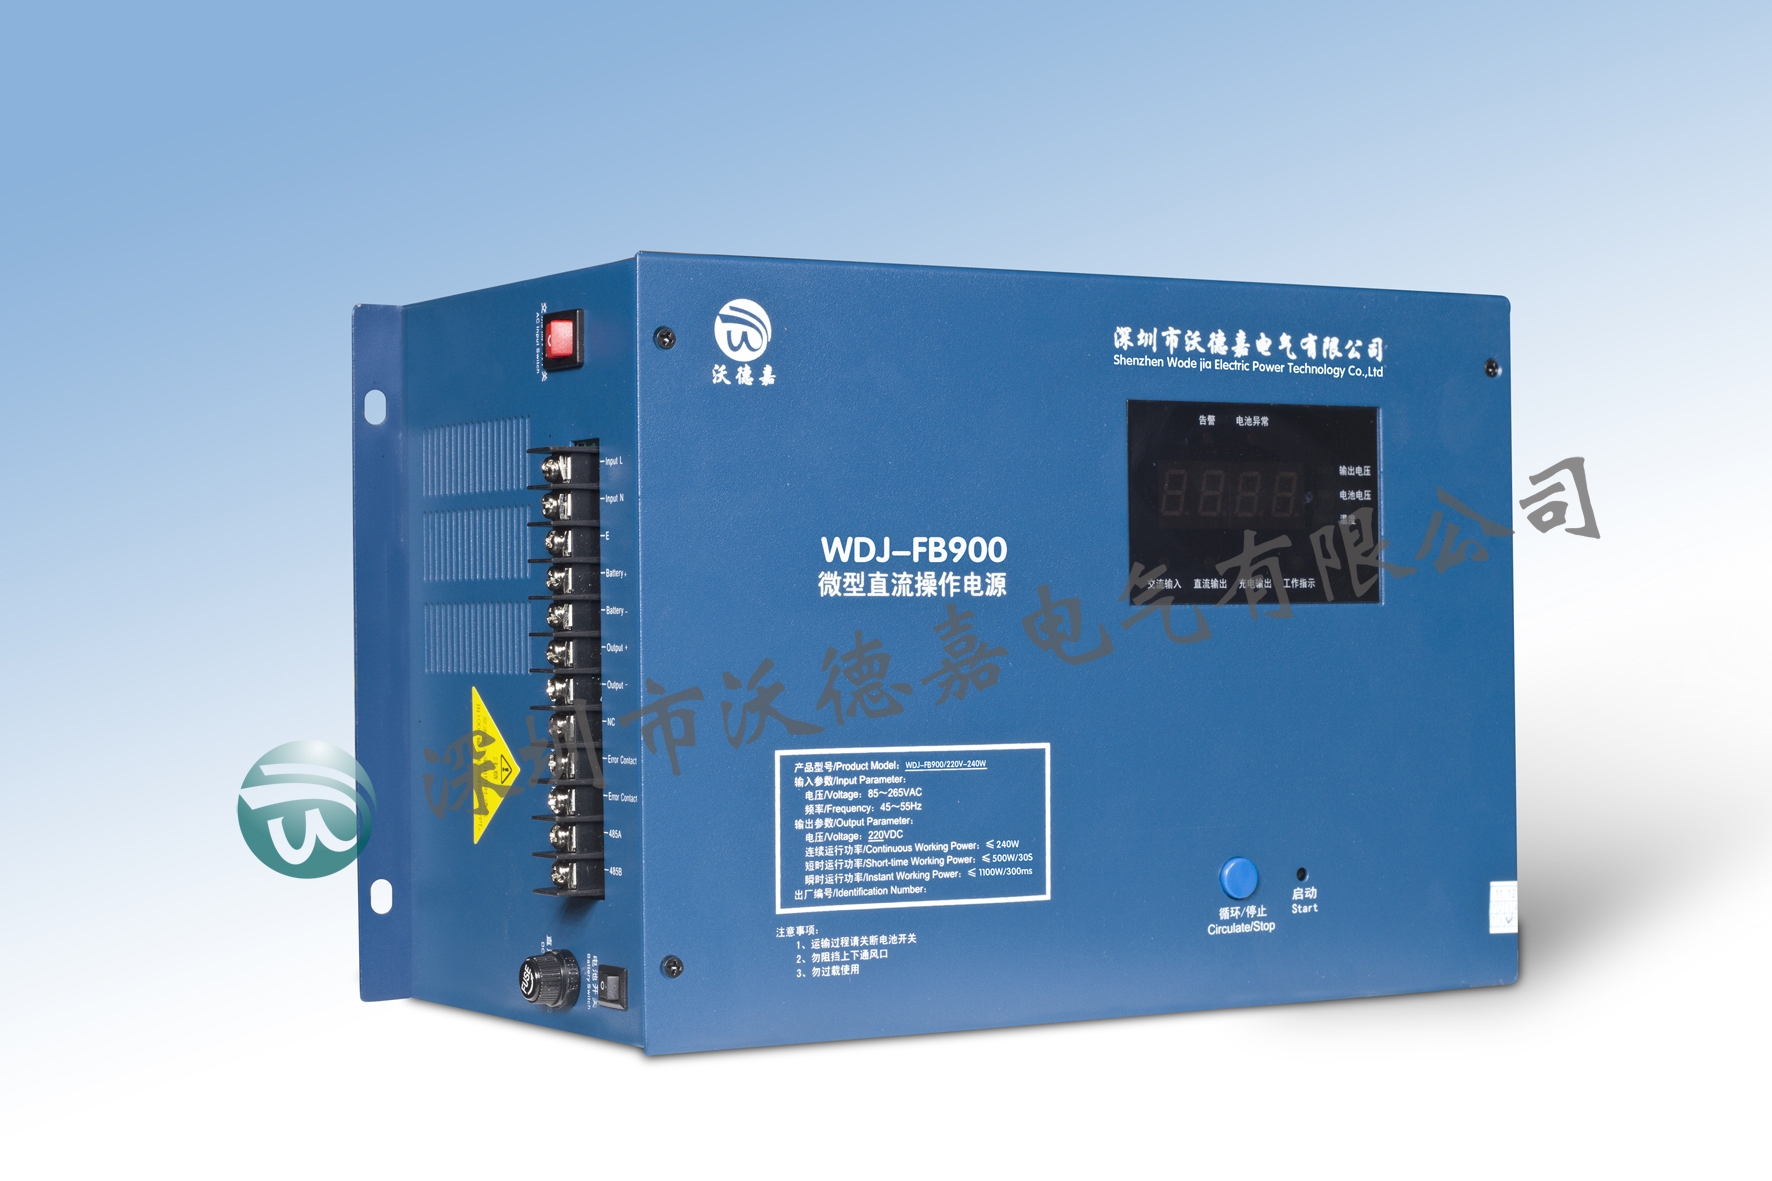 WDJ-FB900系列微型直流操作电源